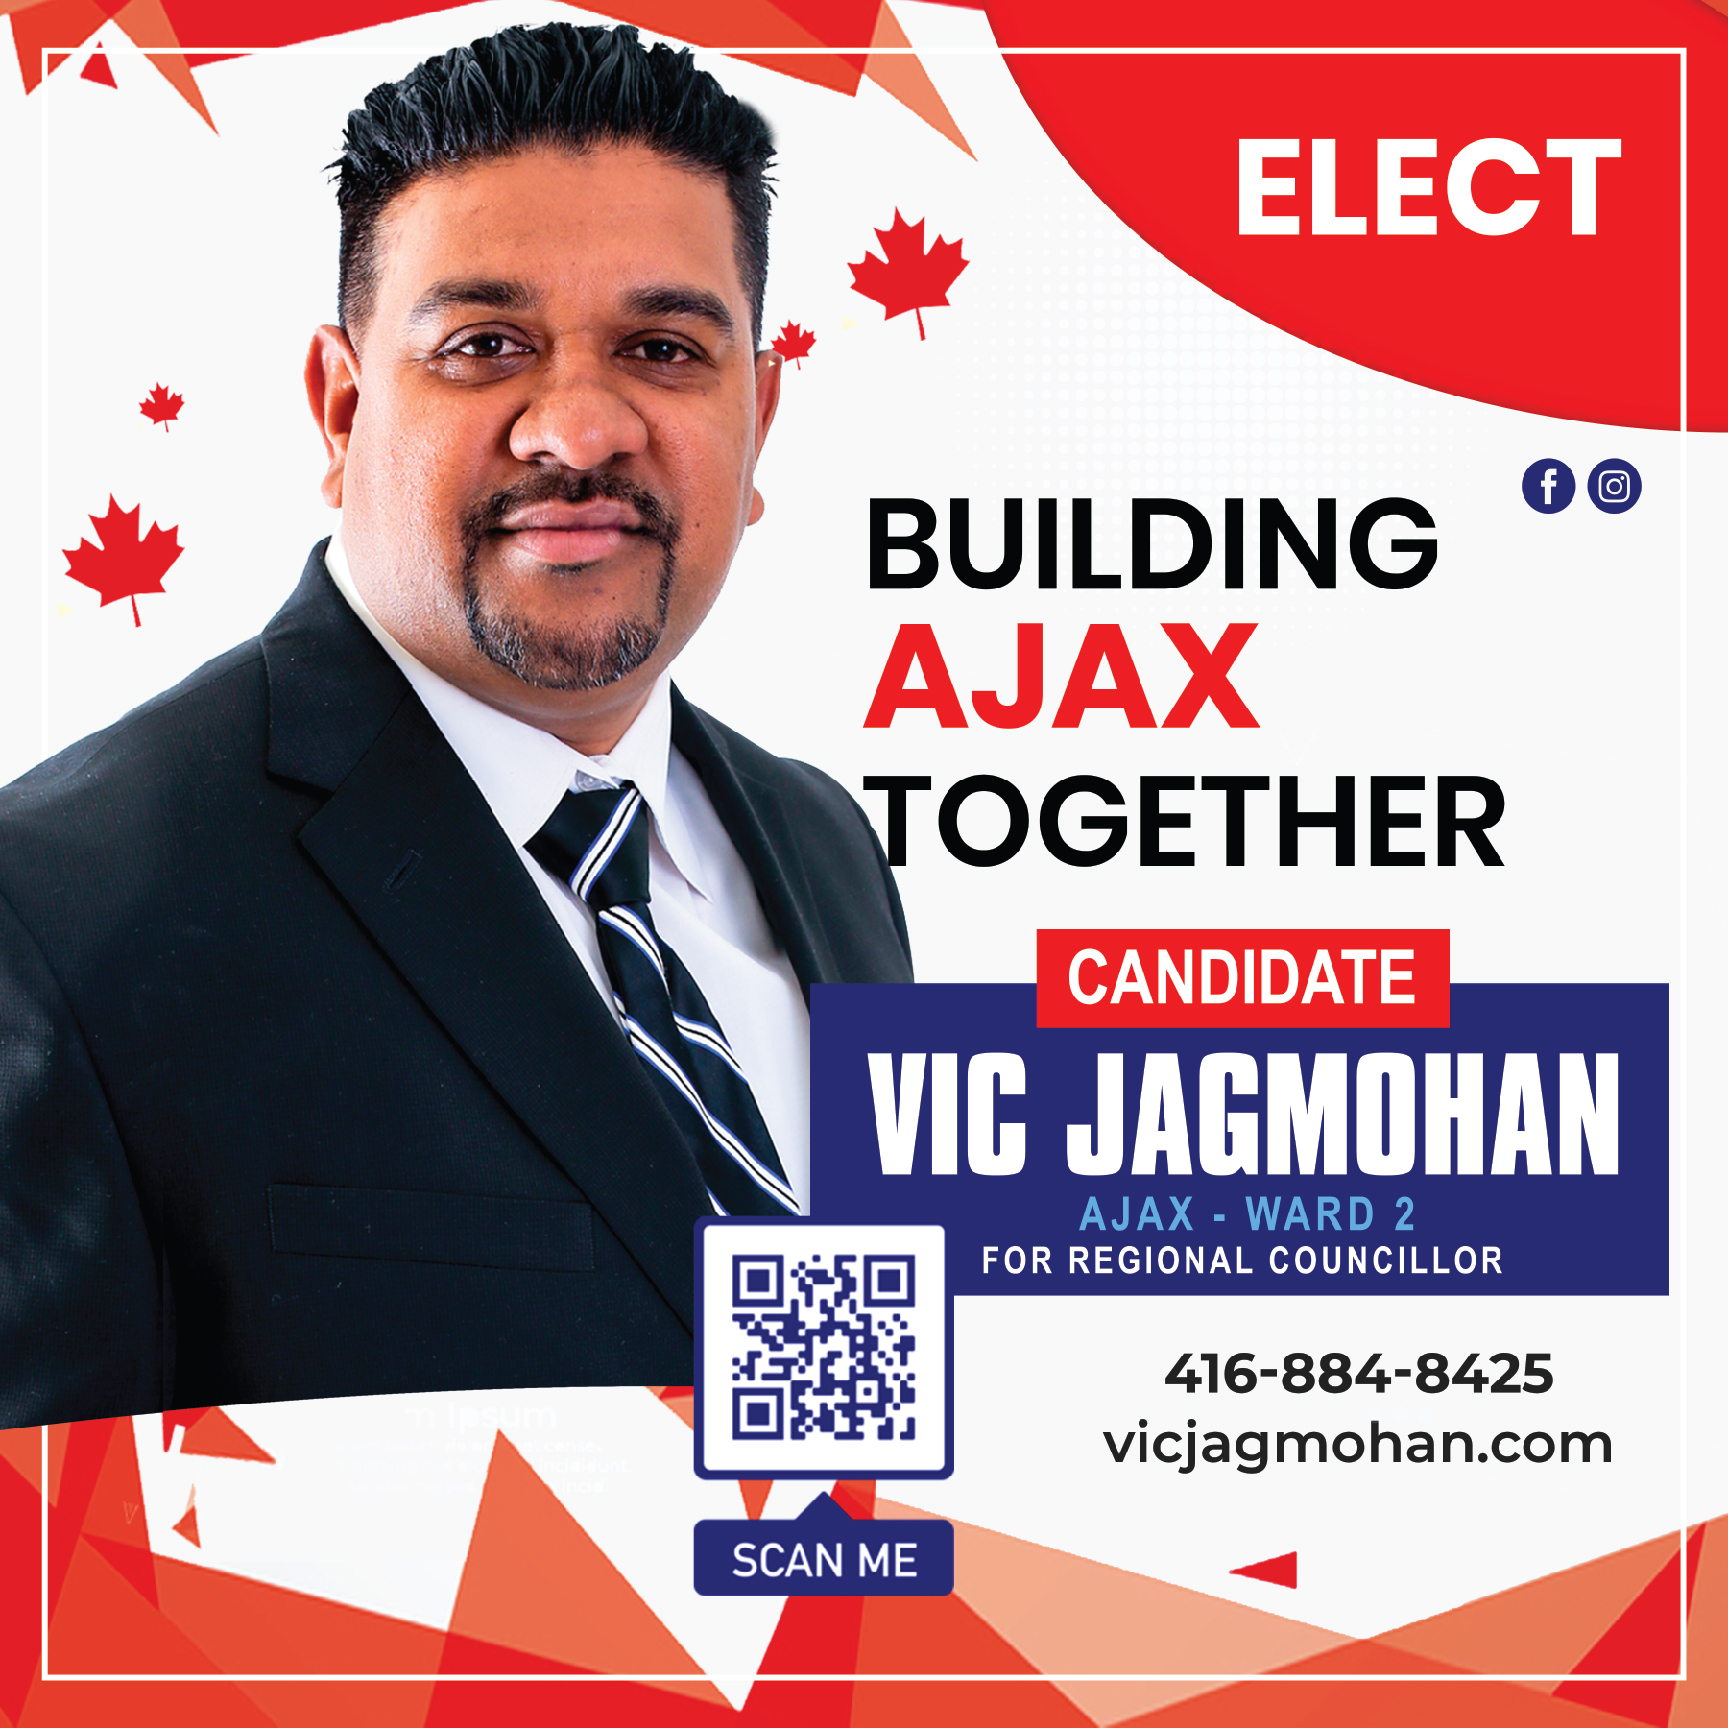 Vic Jagmohan